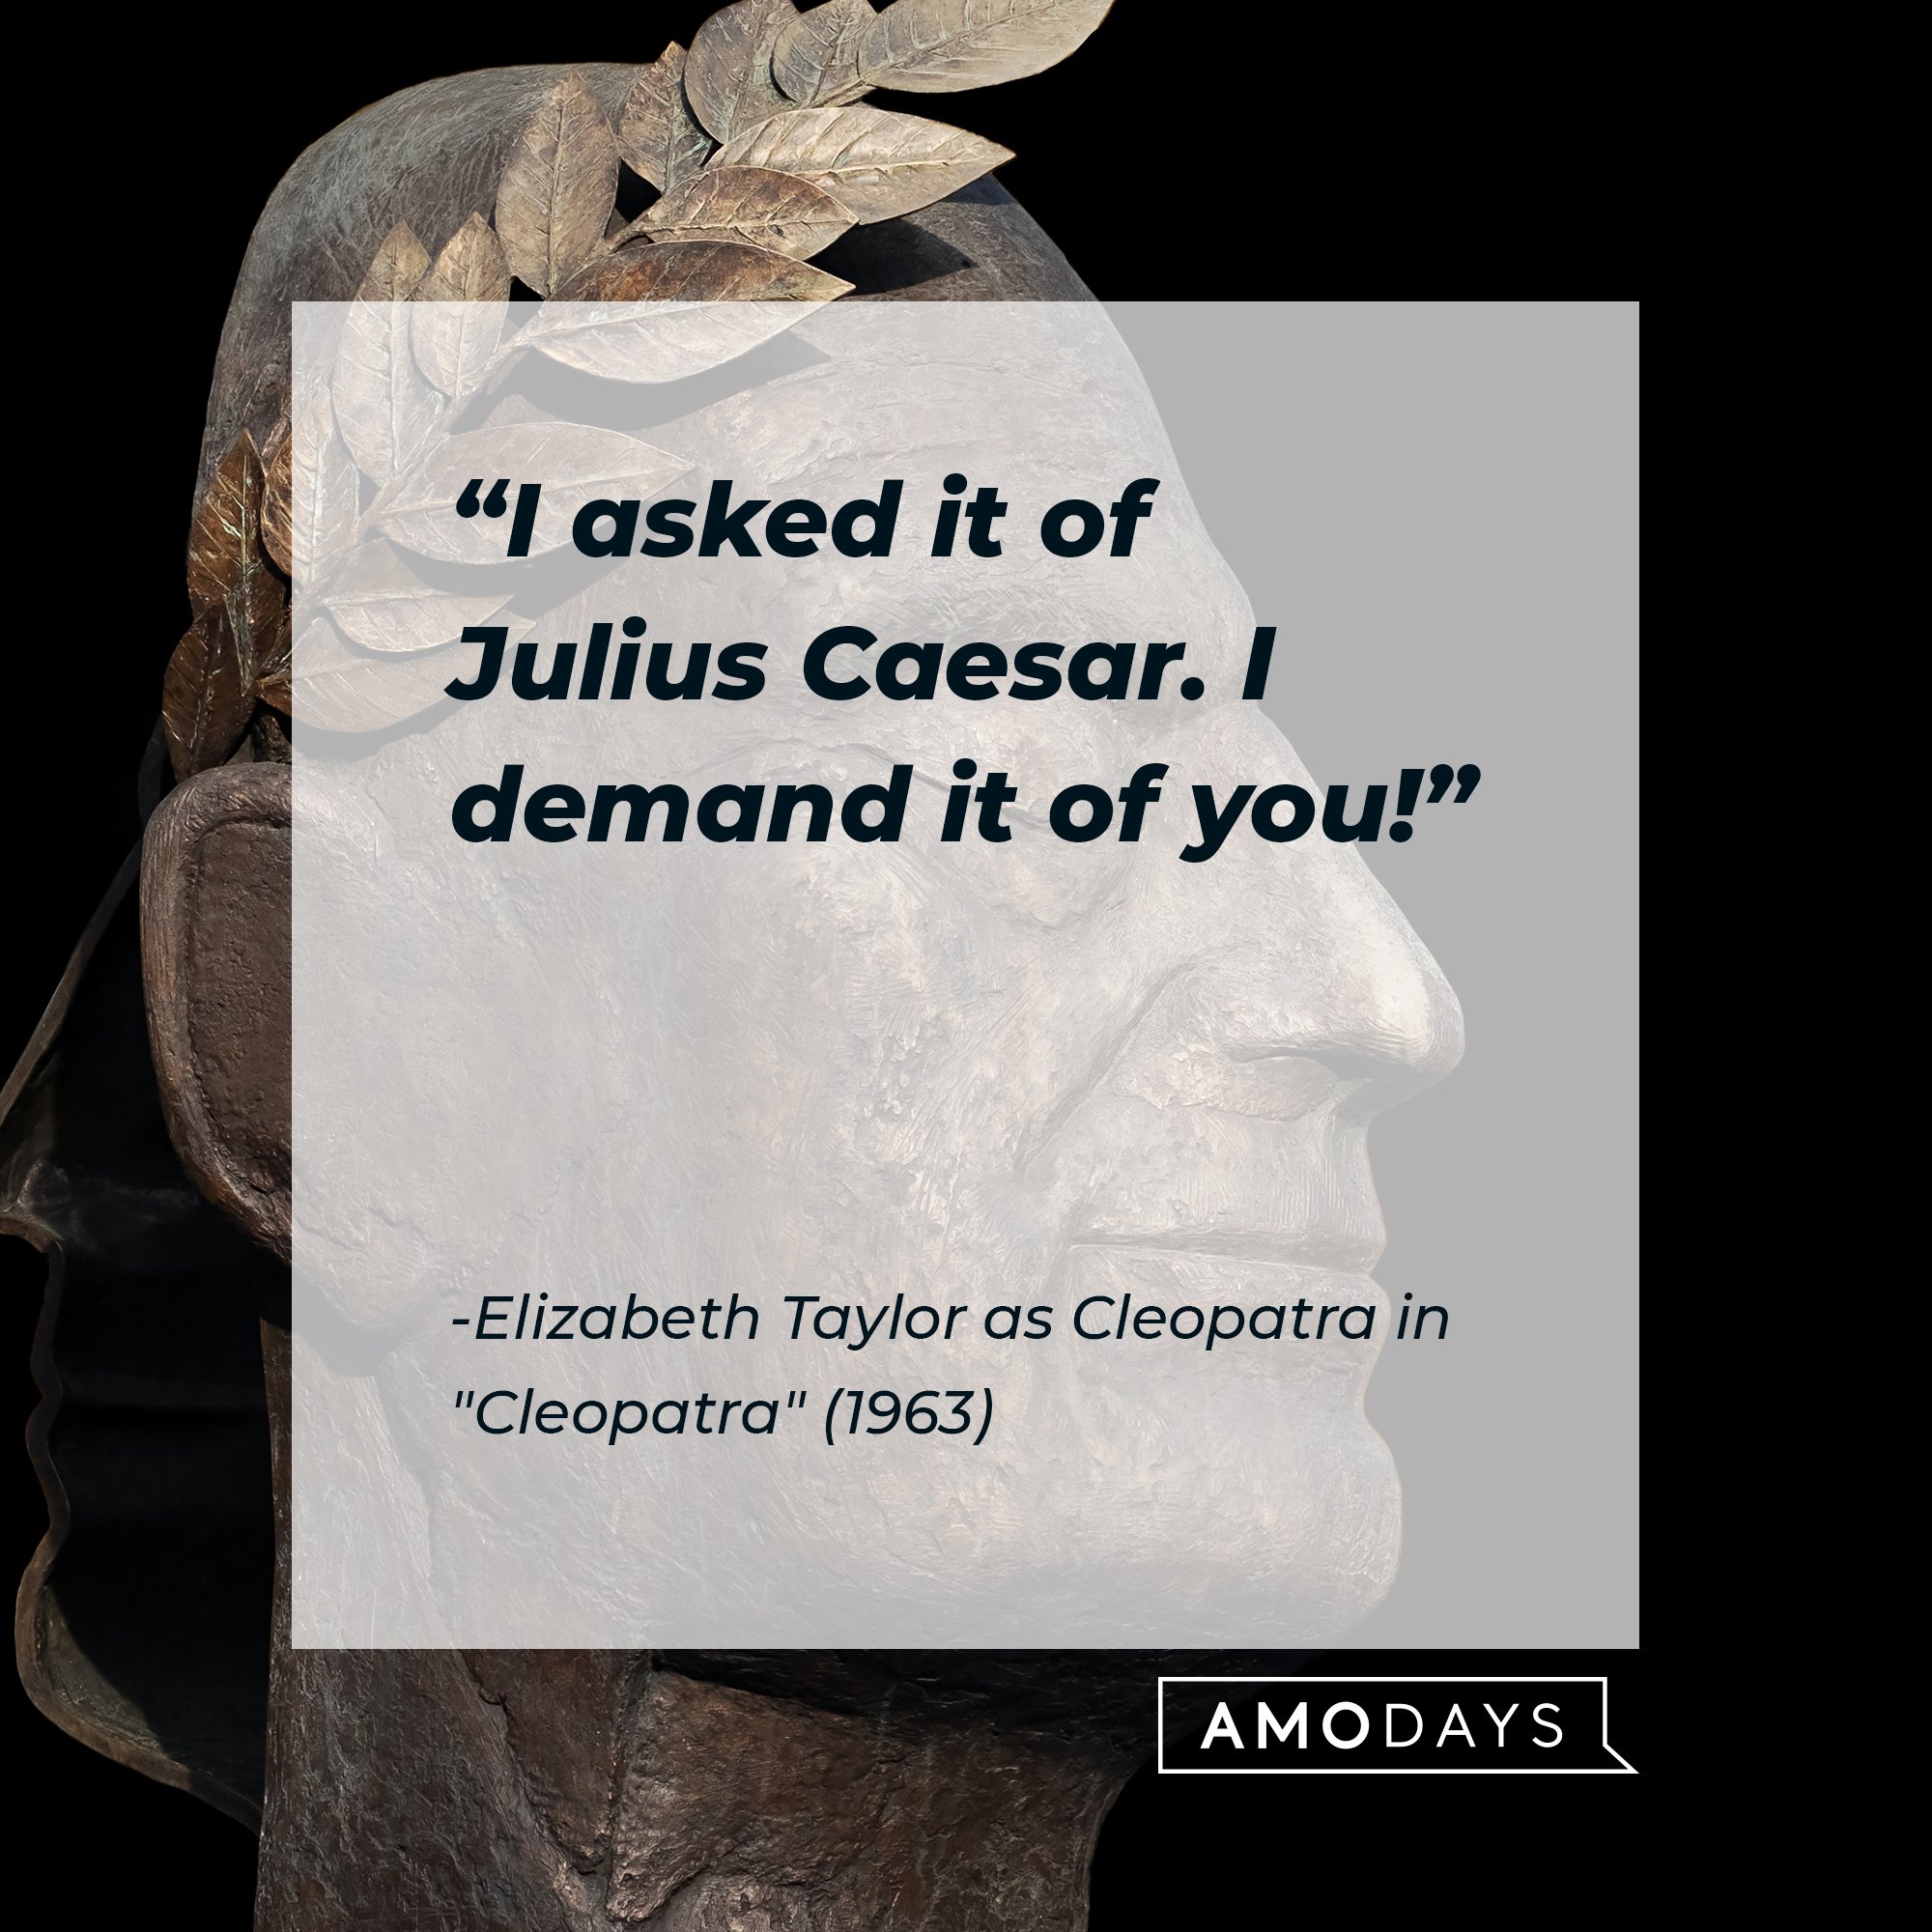  Elizabeth Taylor as Cleopatra in "Cleopatra" (1963):  "I asked it of Julius Caesar. I demand it of you!" | Image: AmoDays